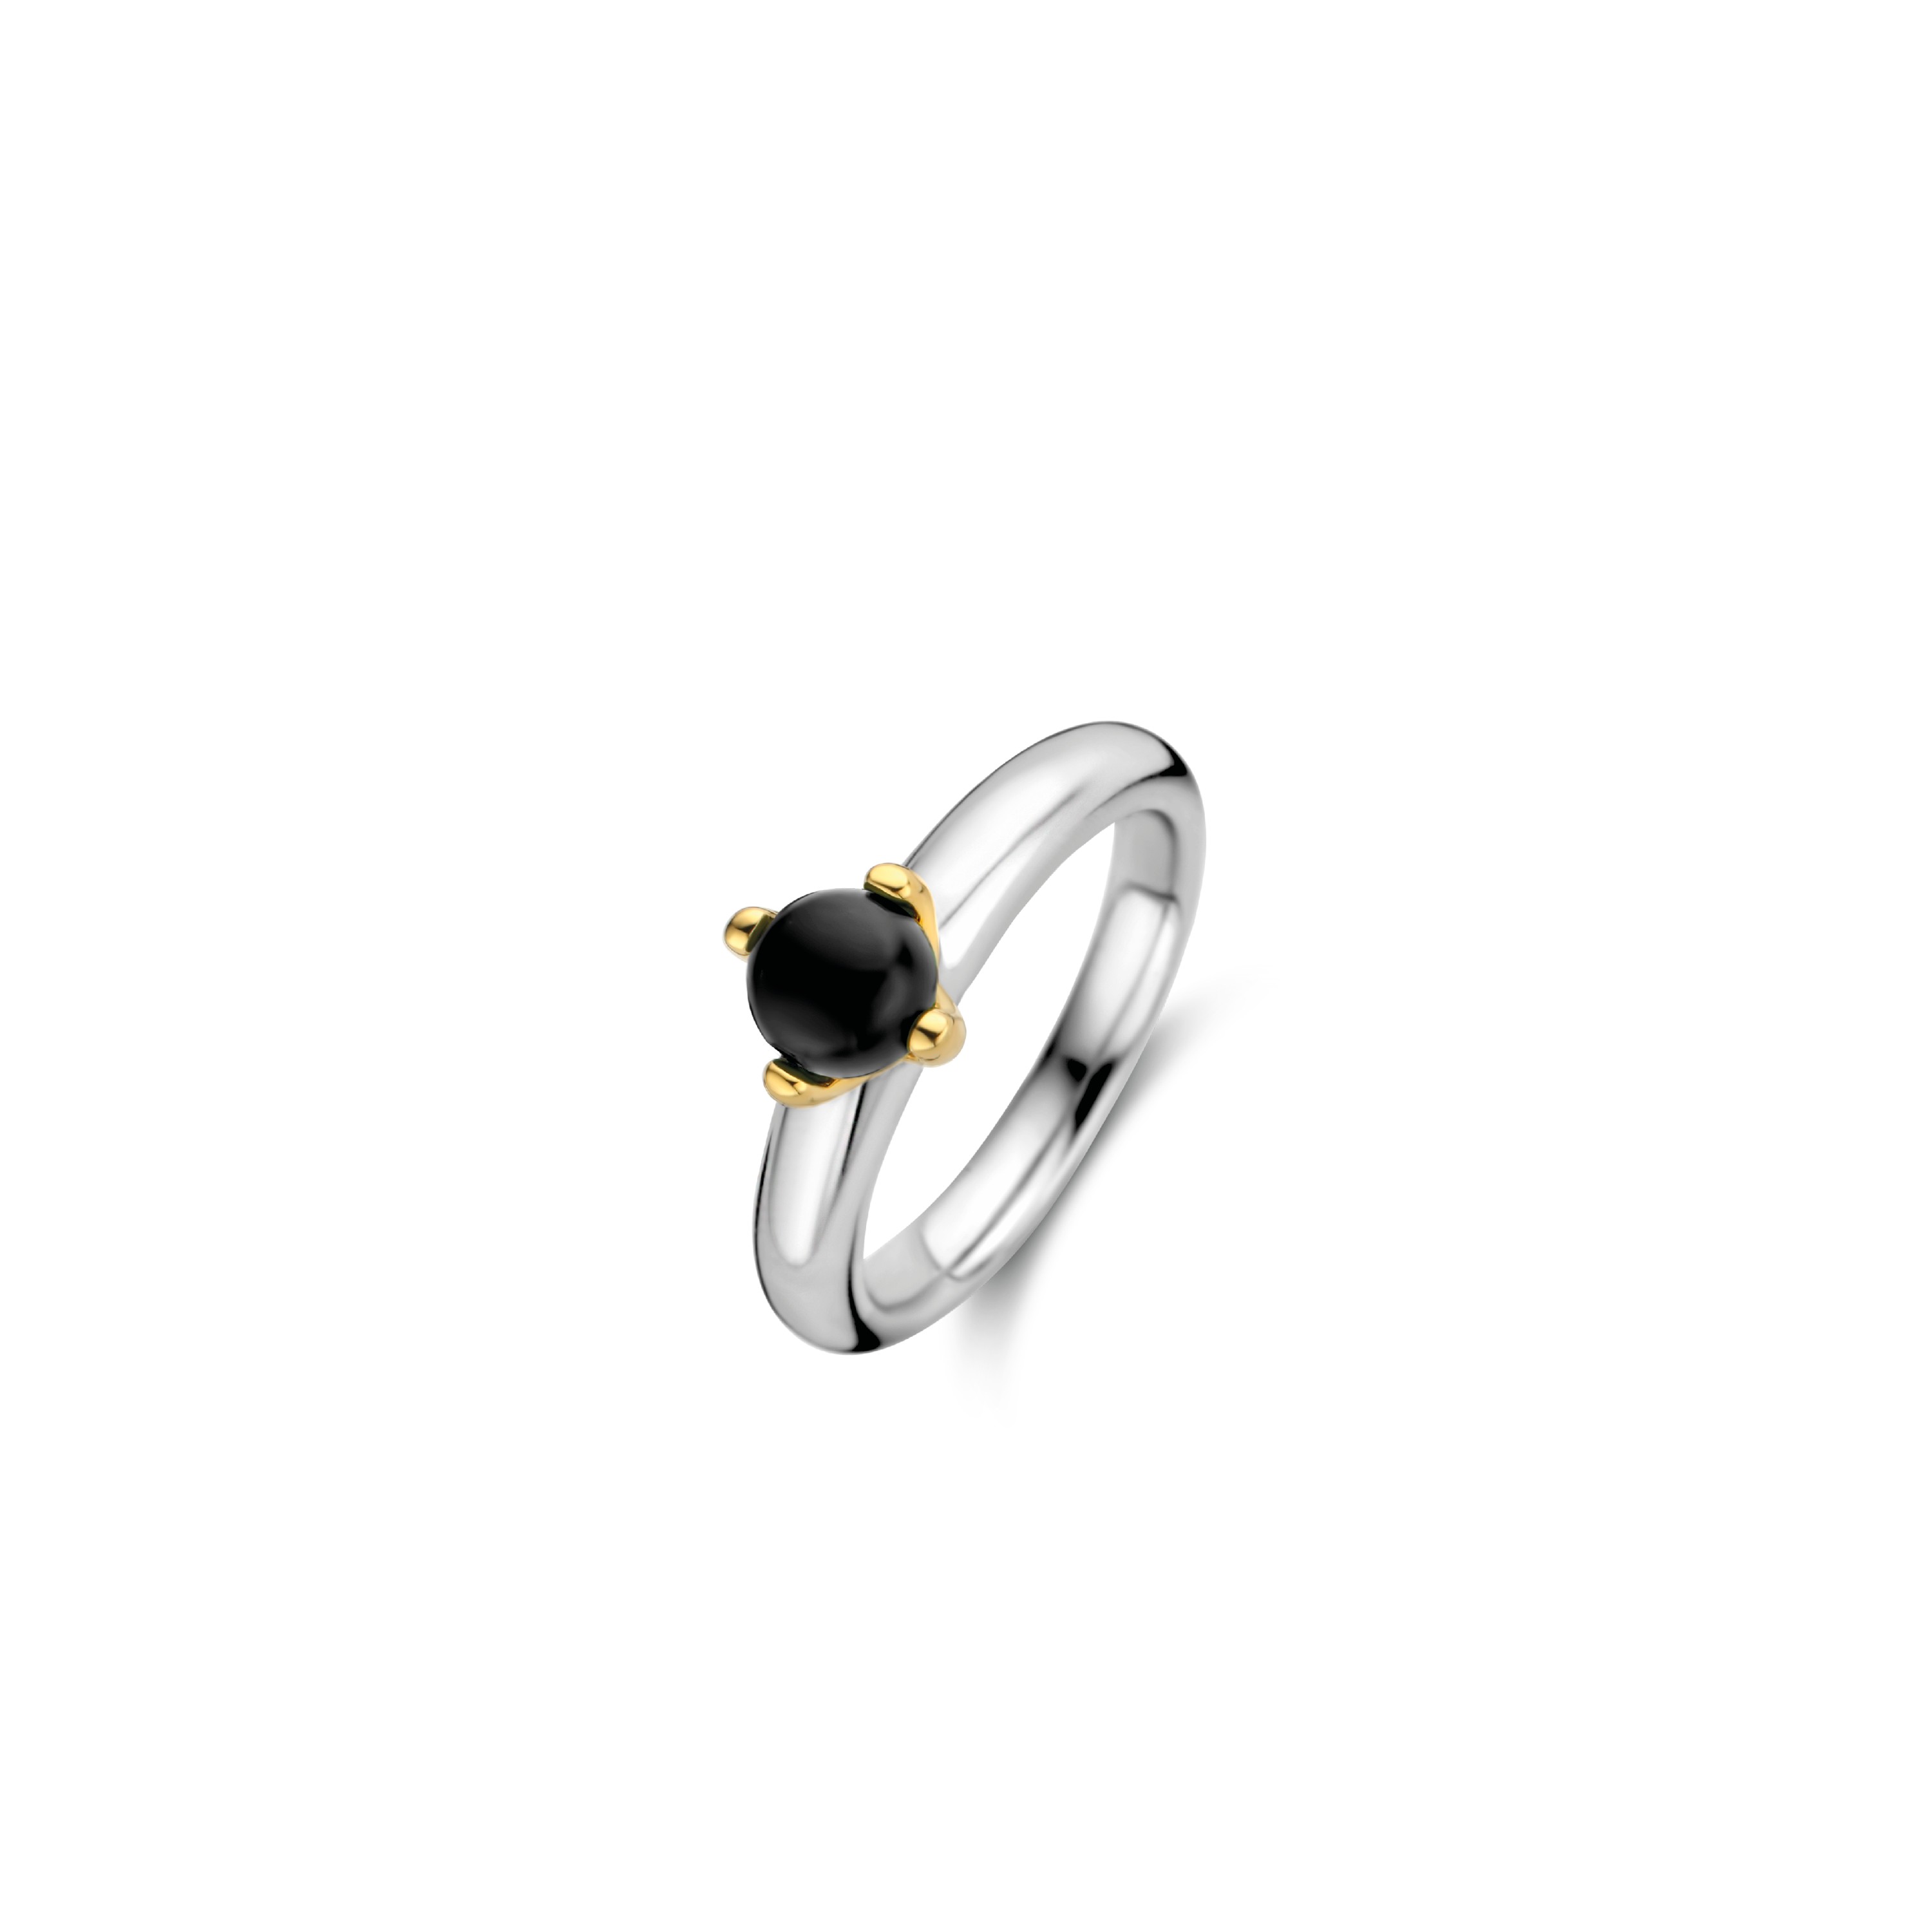 TI SENTO - Milano Ring 12126BO Gala Jewelers Inc. White Oak, PA